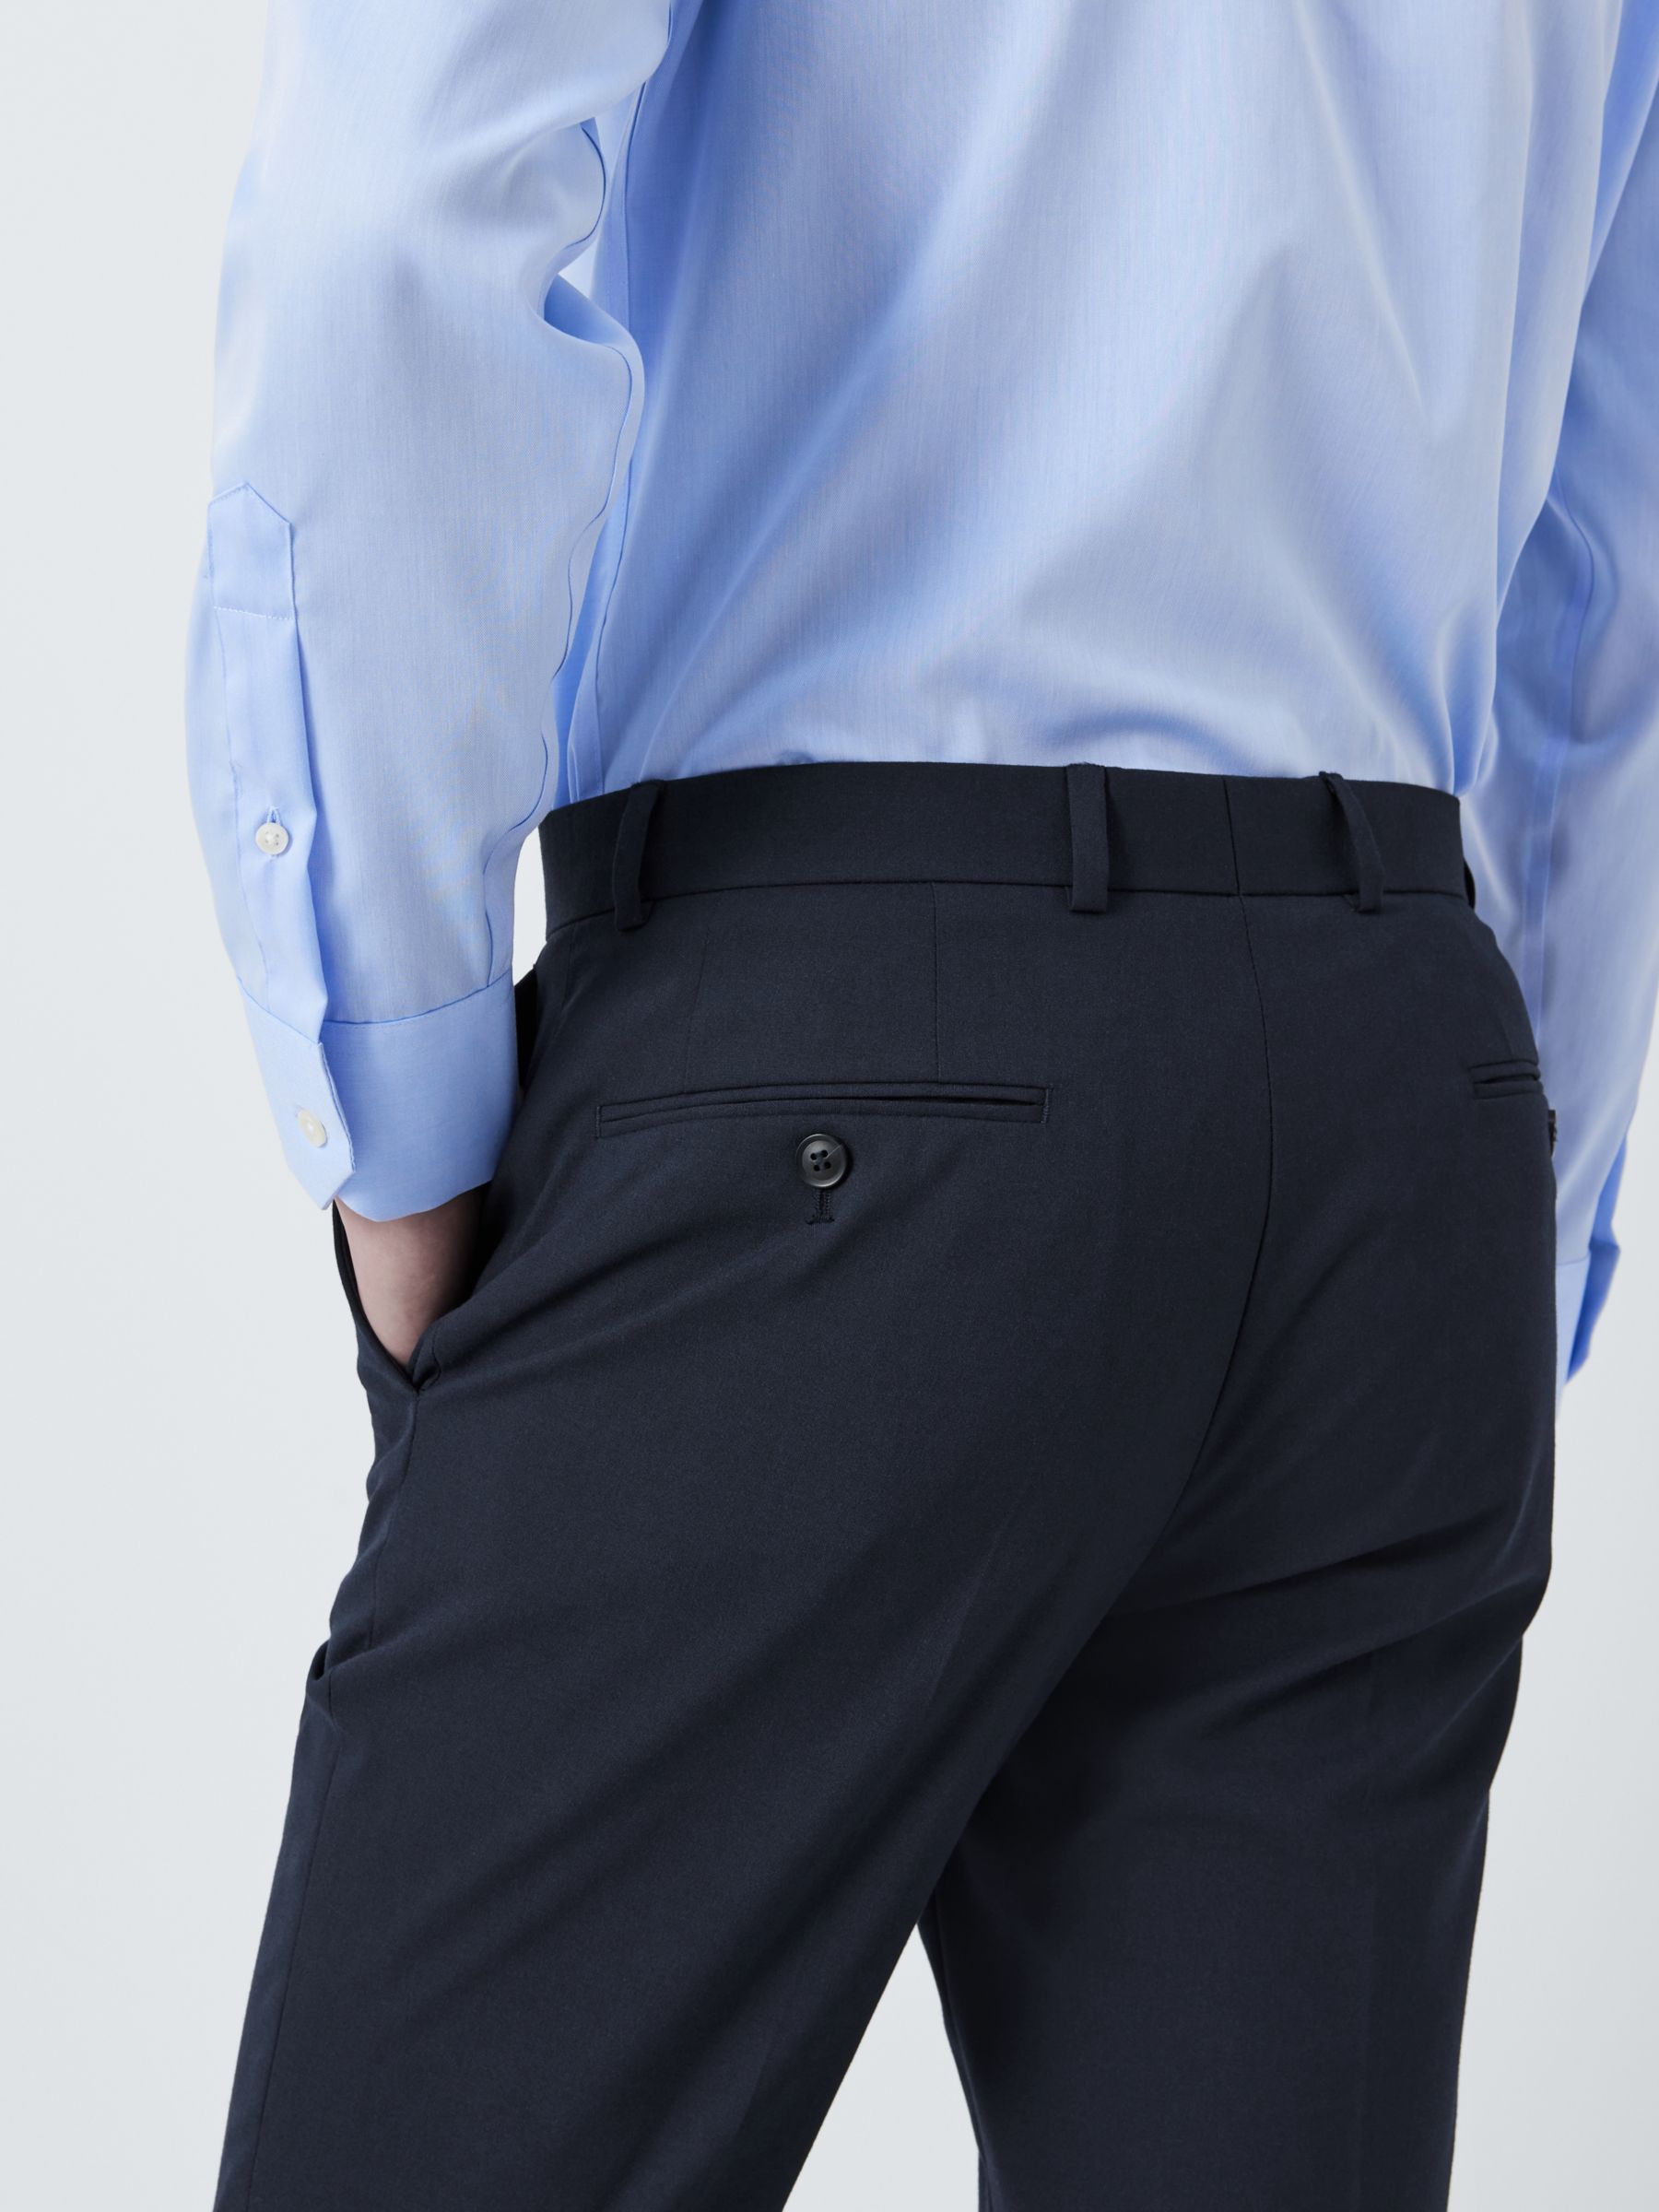 John Lewis Slim Fit Starter Suit Trousers, Navy, 30R